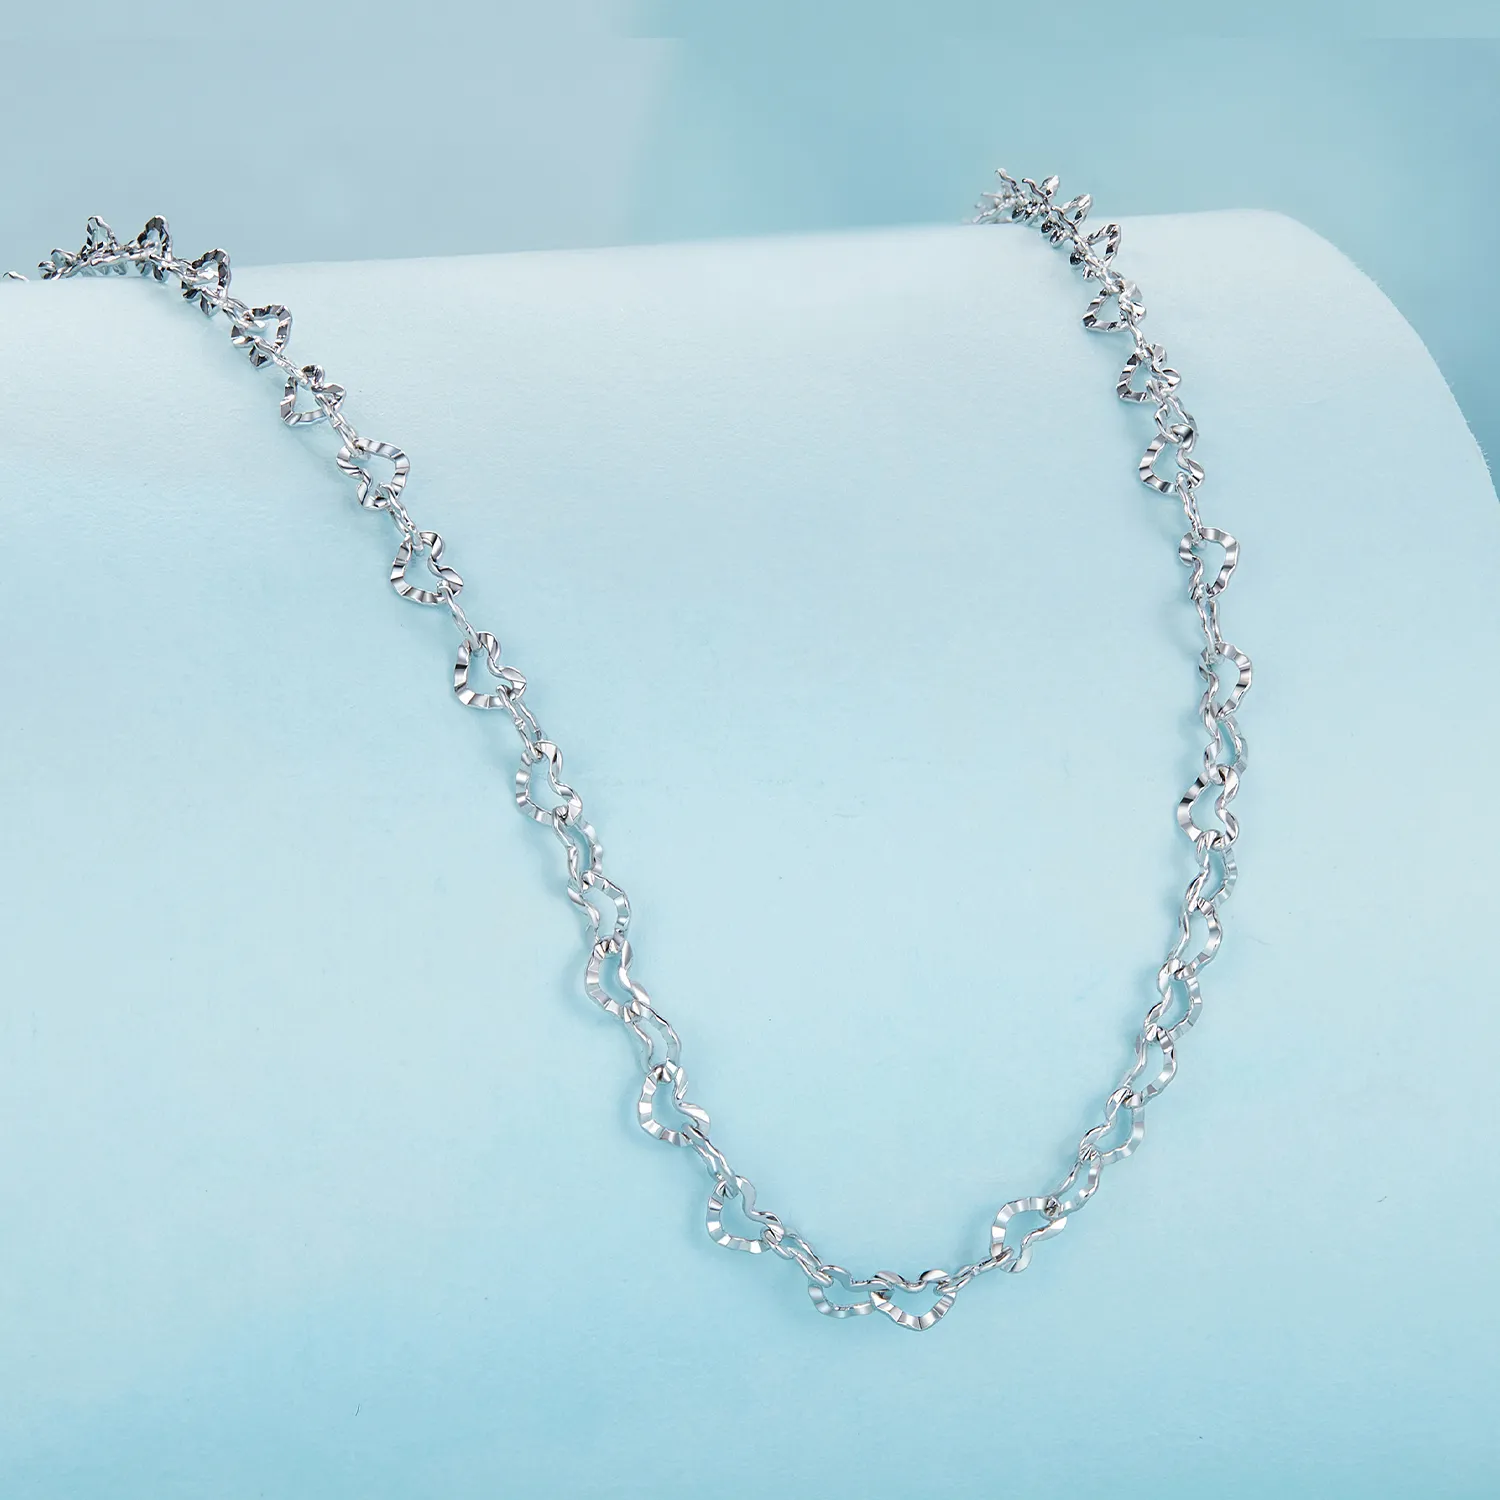 Pandora Style Link Necklace - SCA026